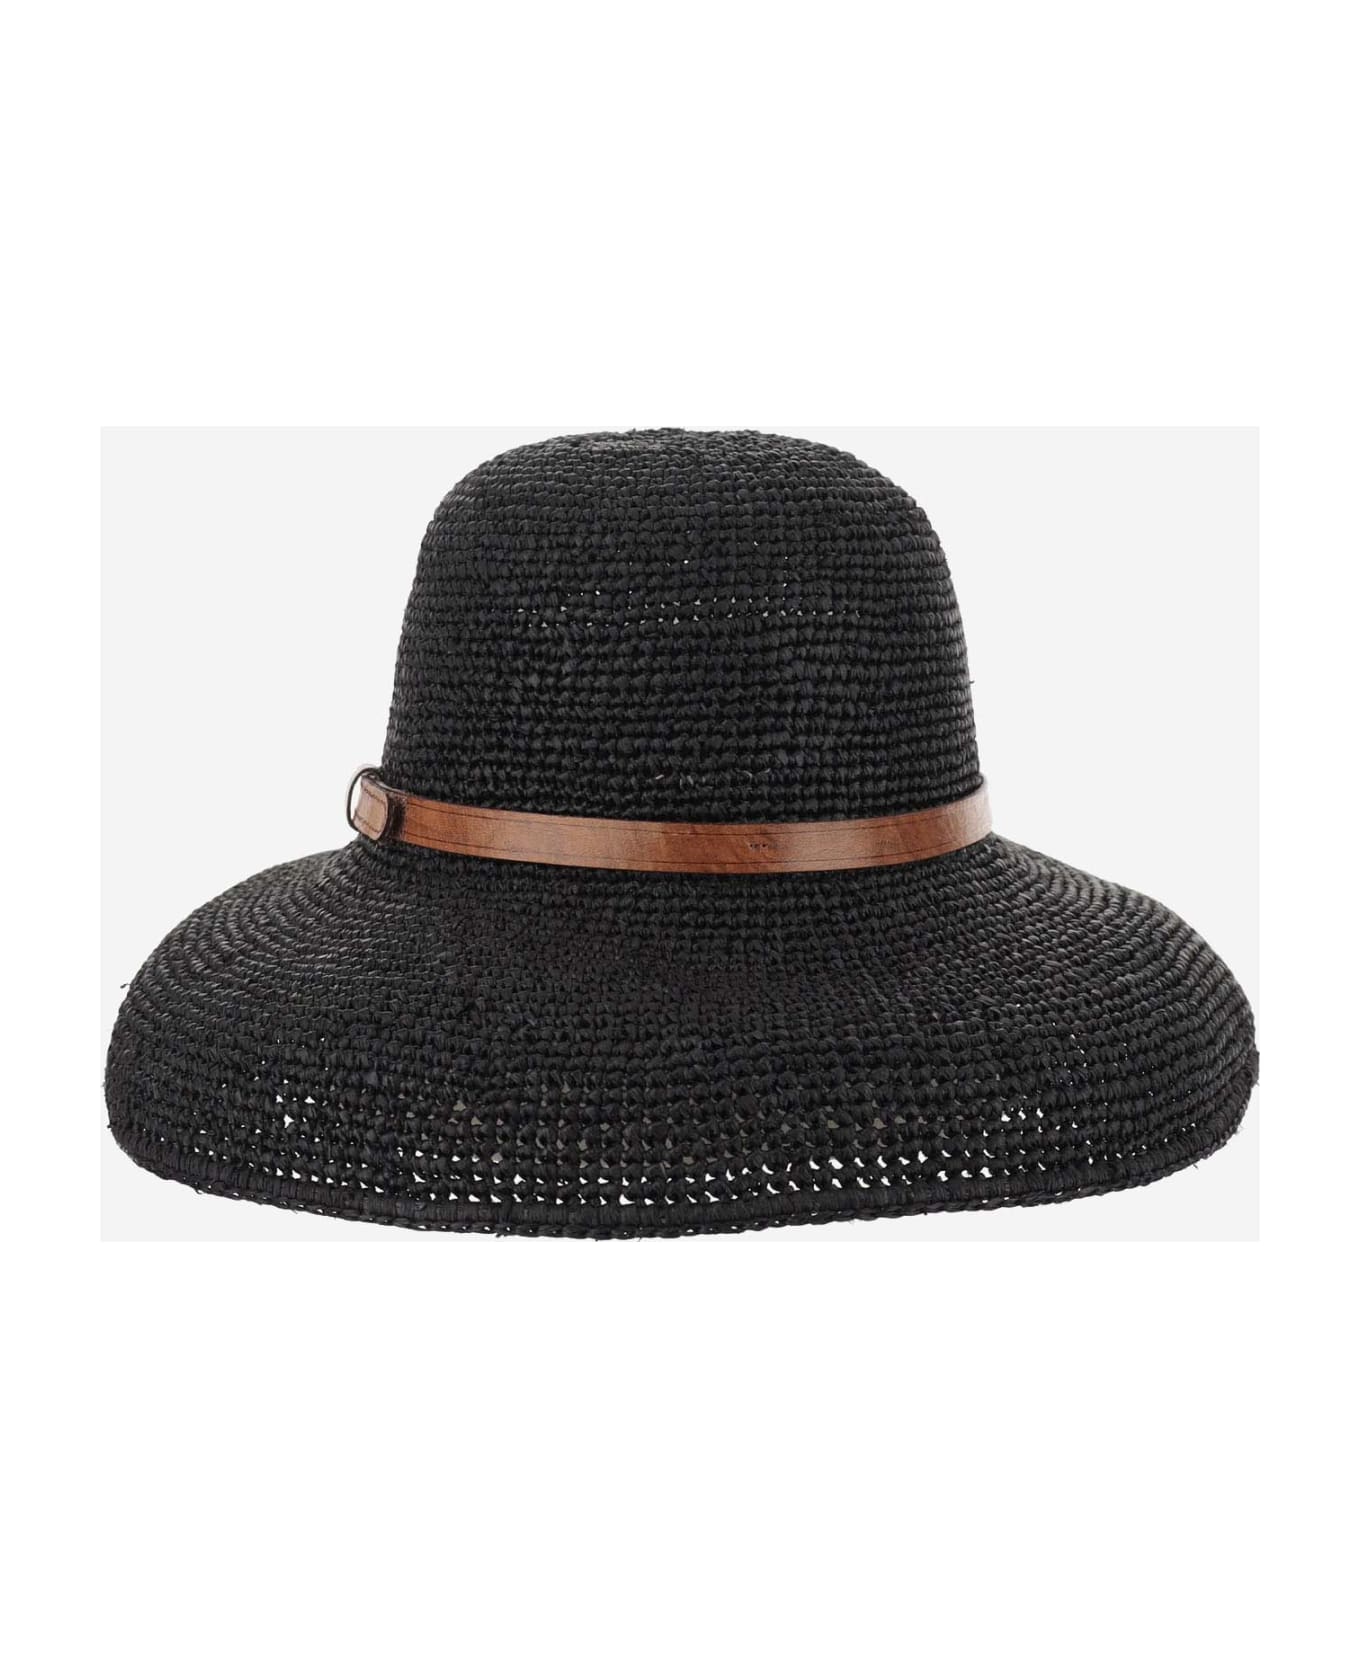 Ibeliv Rova Hat - Black 帽子